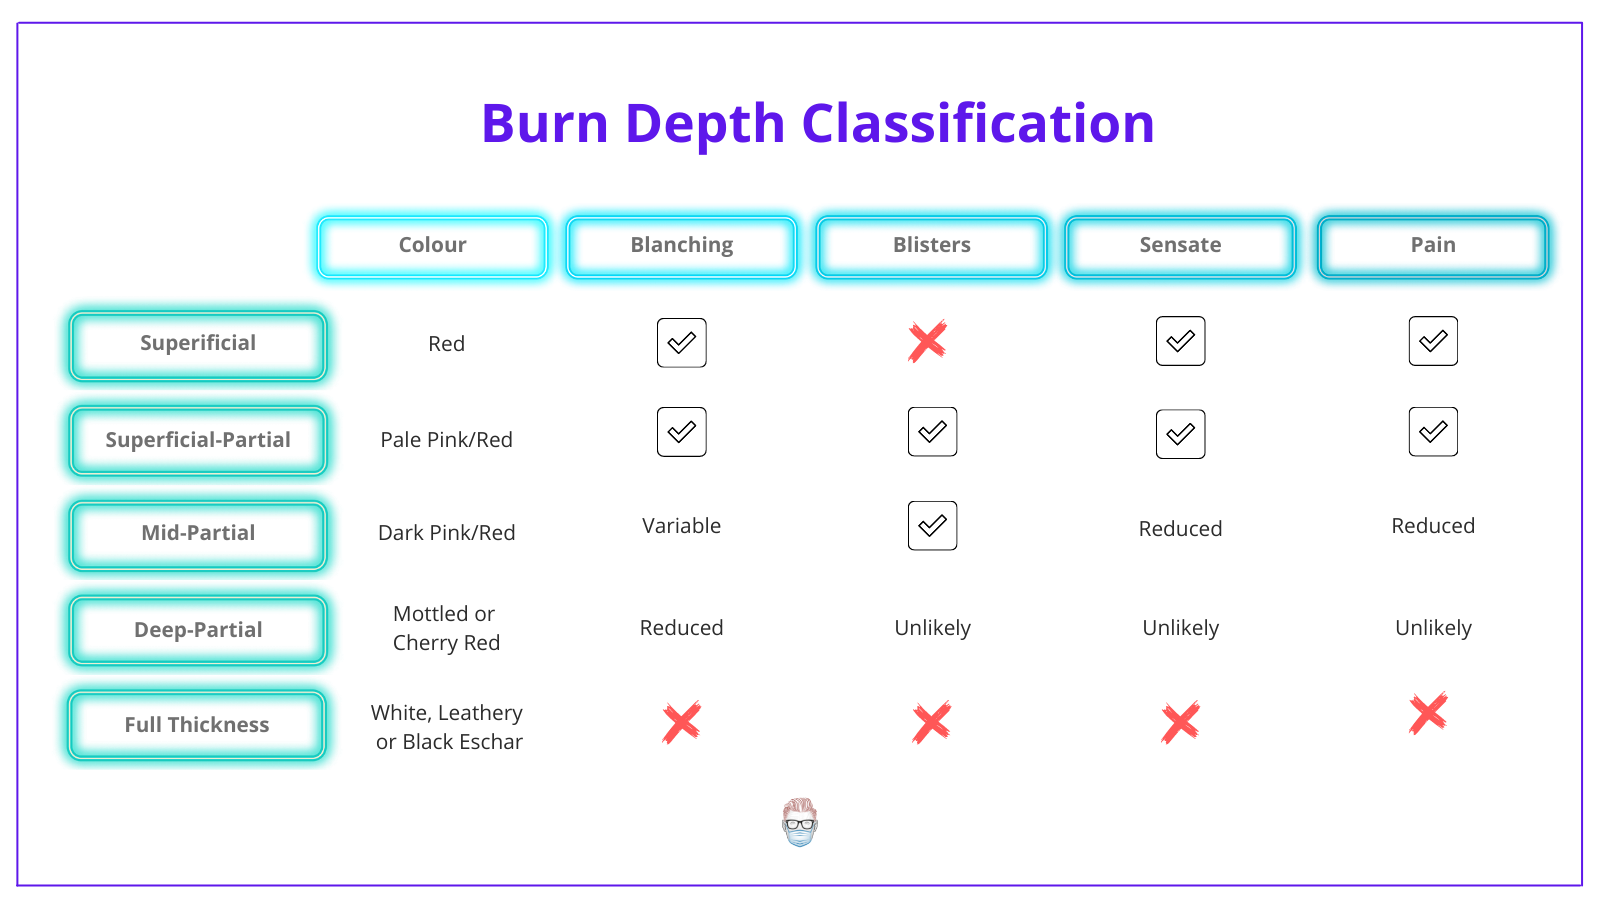 Burn Depth Classification Chart, Burn Classification, Depth, Burn, Chart, Superifical, 1st Degree, Superificial Partial, Mid Partial, Deep Partial, Full Thickness, 2nd Degree, 3rd Degree, Burn Depth